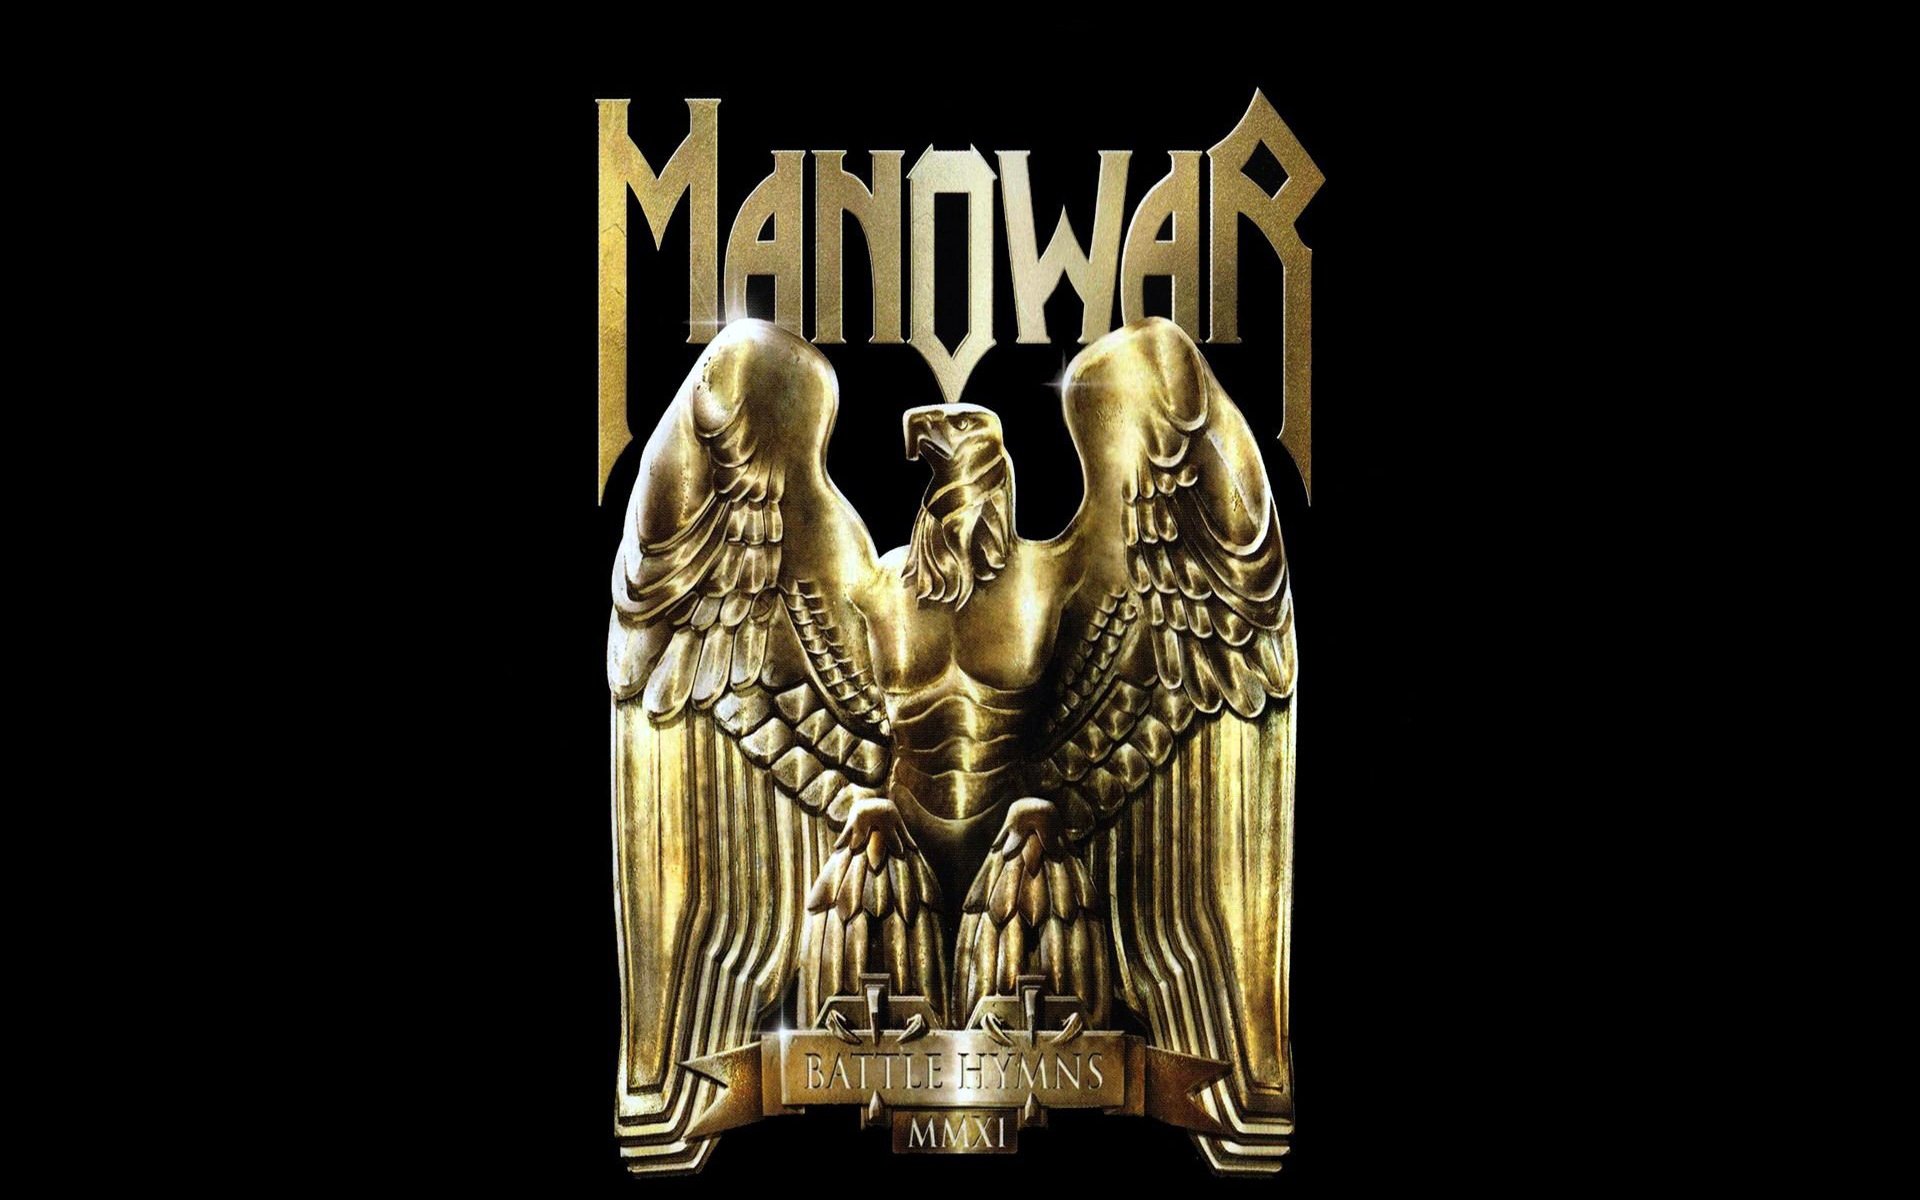 Manowar united warriors. Manowar логотип группы. Группа Manowar обложки. Группа Manowar иллюстрации. Постеры группы Manowar.